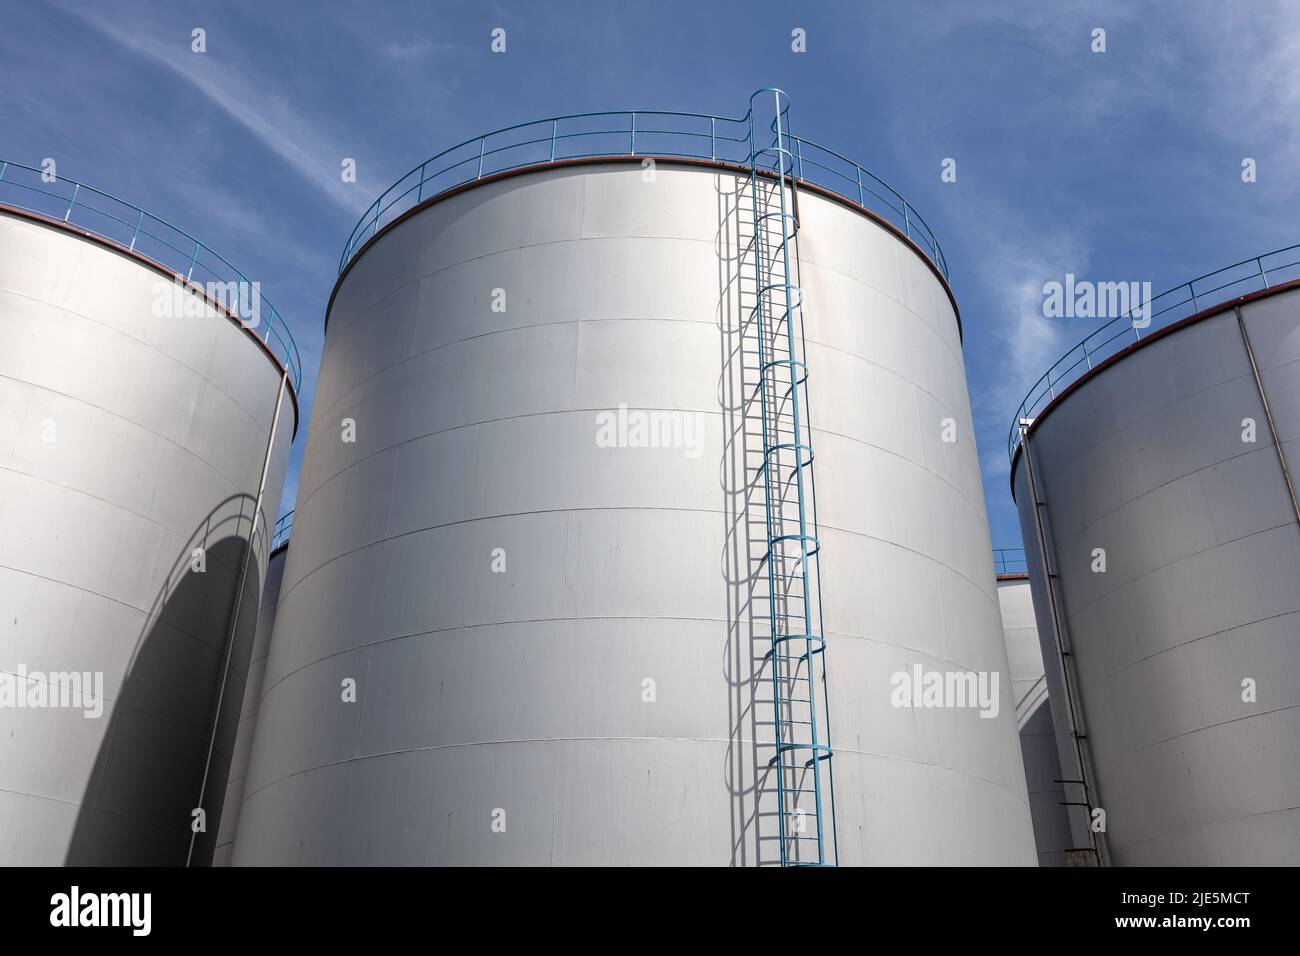 tanks of an oil depot Stock Photo